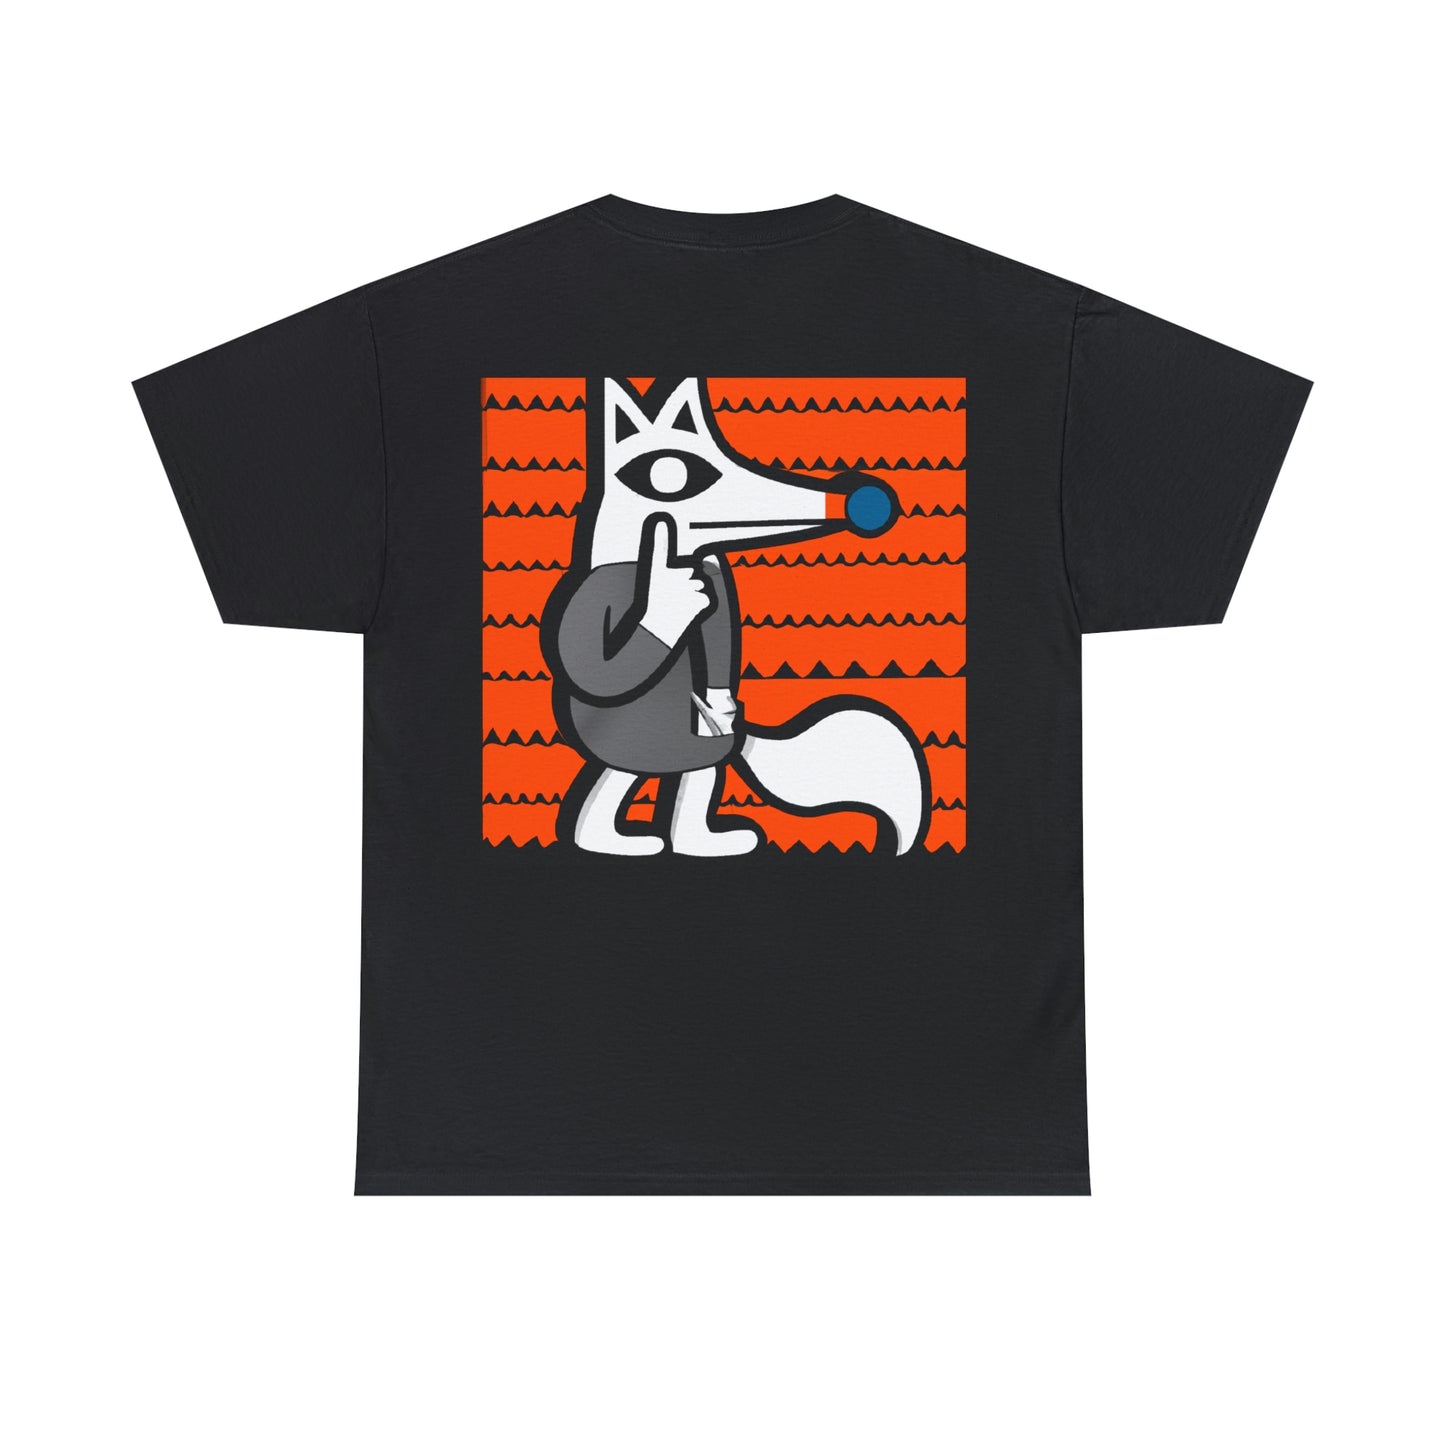 The Fox's Stolen Secret - The Alien T-shirt